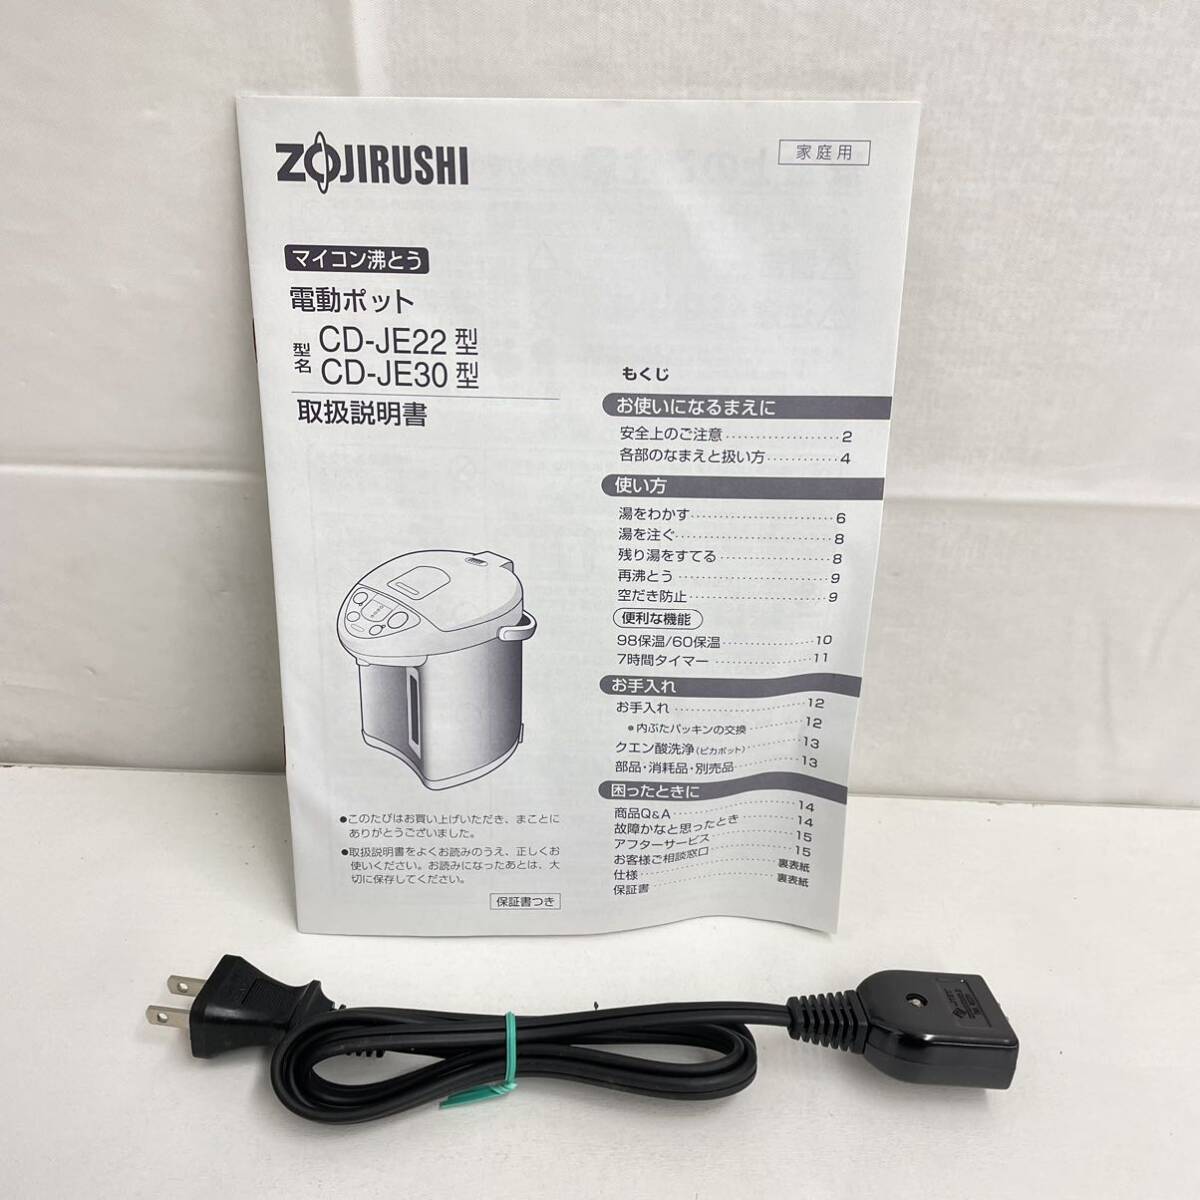 92*[ new goods unused ] Zojirushi ZOJIRUSHI electric pot CD-JE22-TT metallic Brown 2.2L 2010 year made microcomputer ... high speed hot water ...*